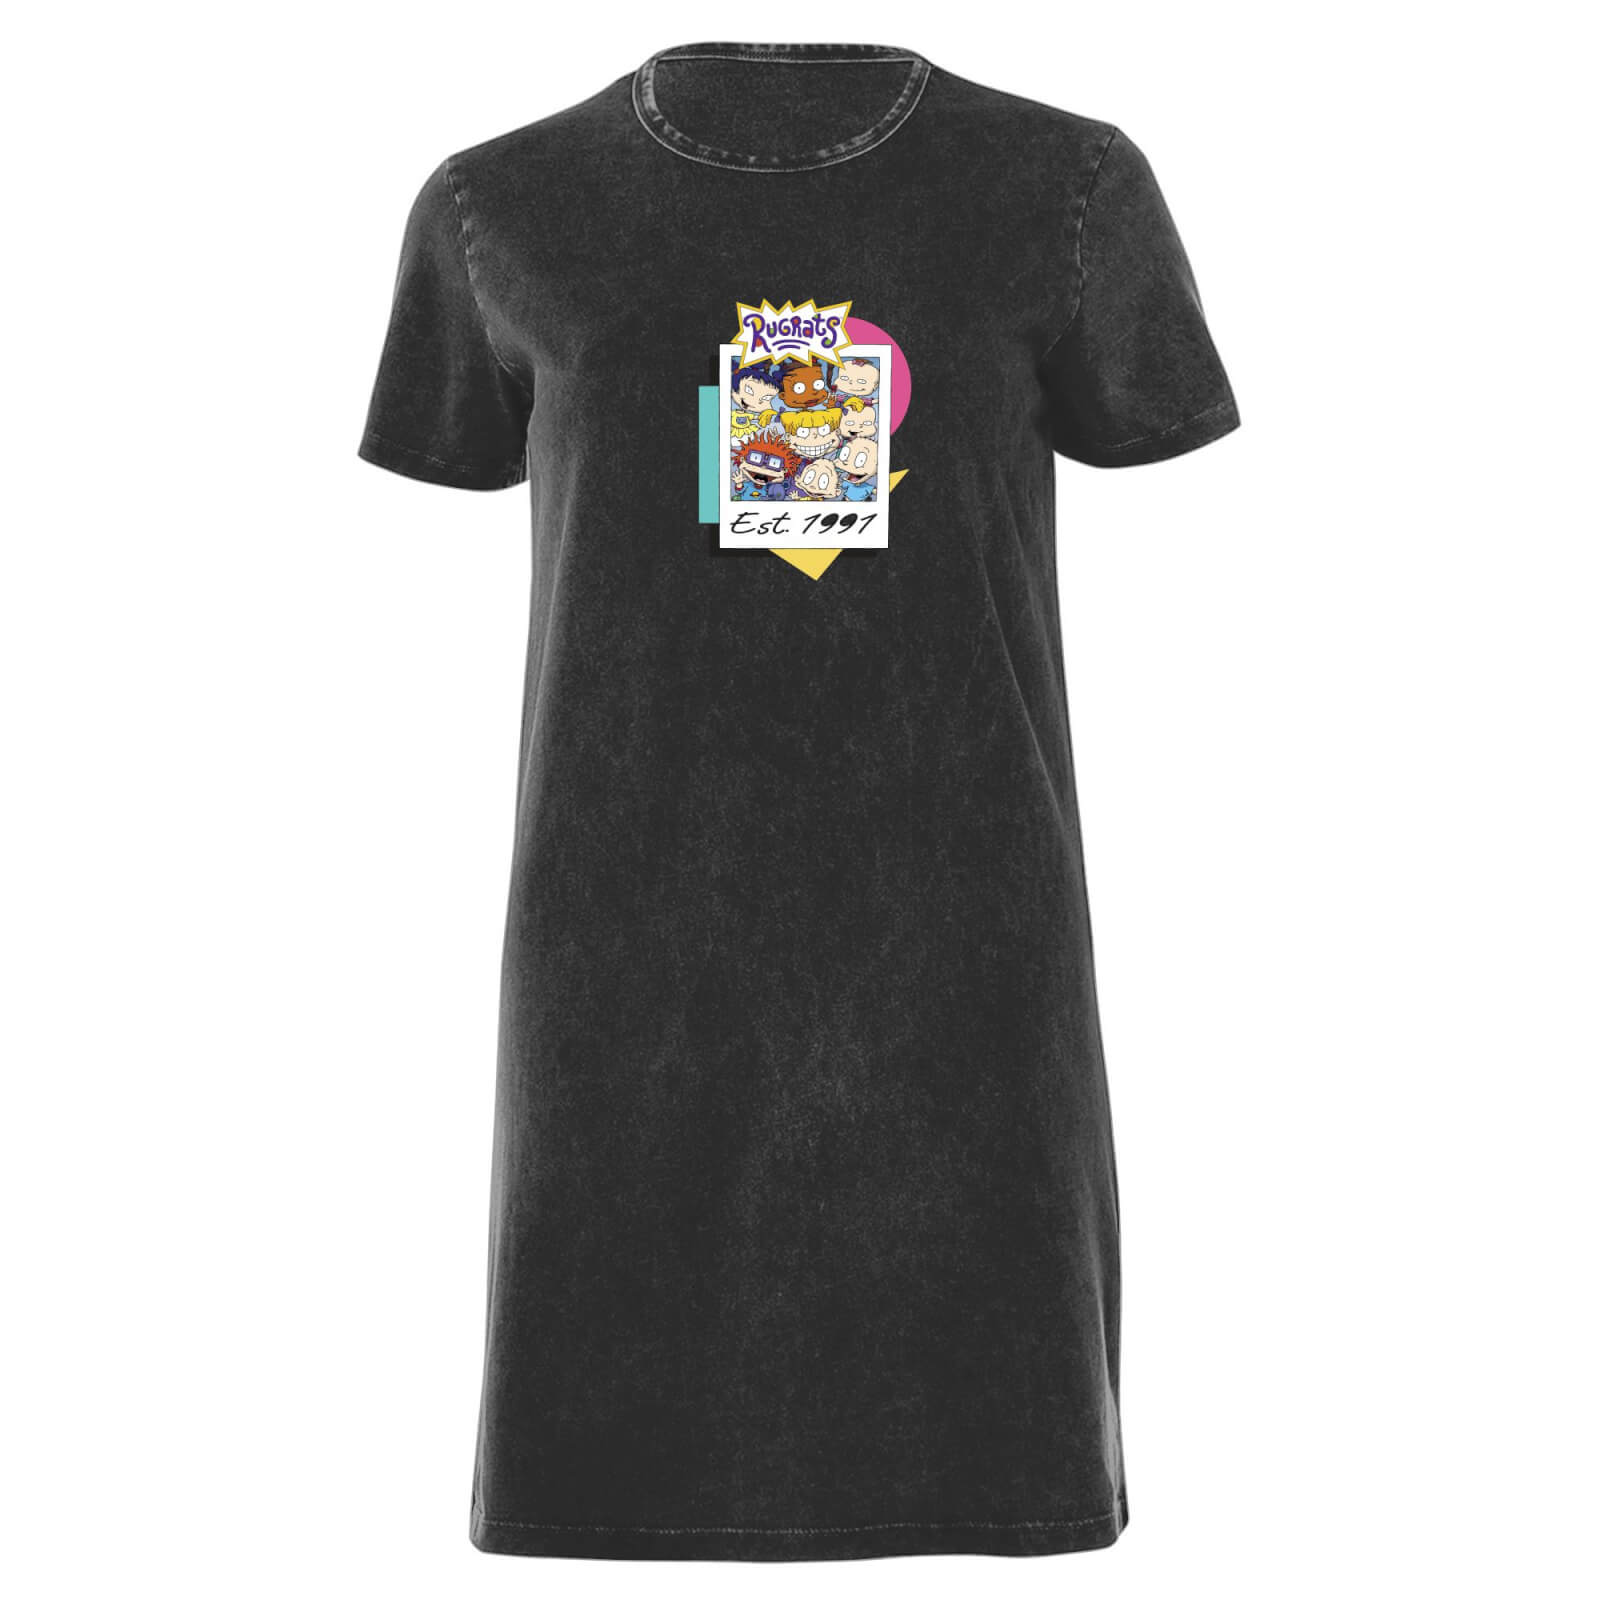 Nickelodeon Rugrats Women's T-Shirt Dress - Black Acid Wash - S - Black Acid Wash